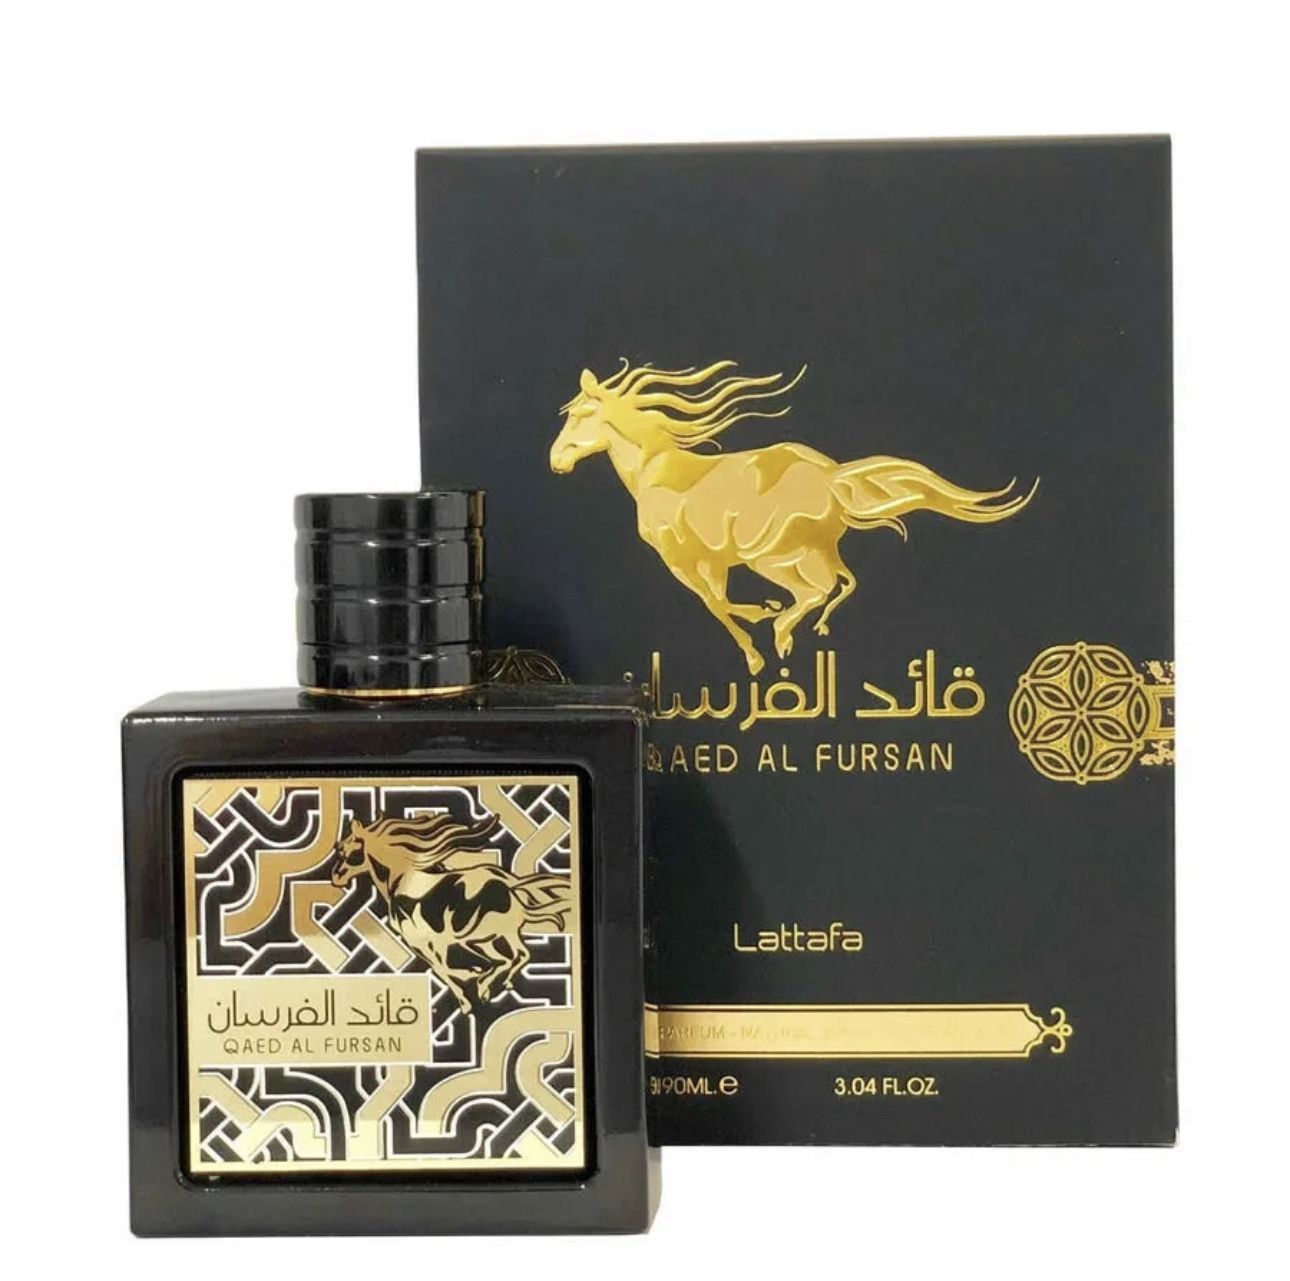 Teriaq lattafa perfumes. Lattafa Perfumes / парфюмерная вода Qaed al Fursan, 90 мл. Lattafa Qaed al Fursan EDP 90 ml. Духи Lattafa Qaed al Fursan. Lattafa Qaed al Fursan для женщин.